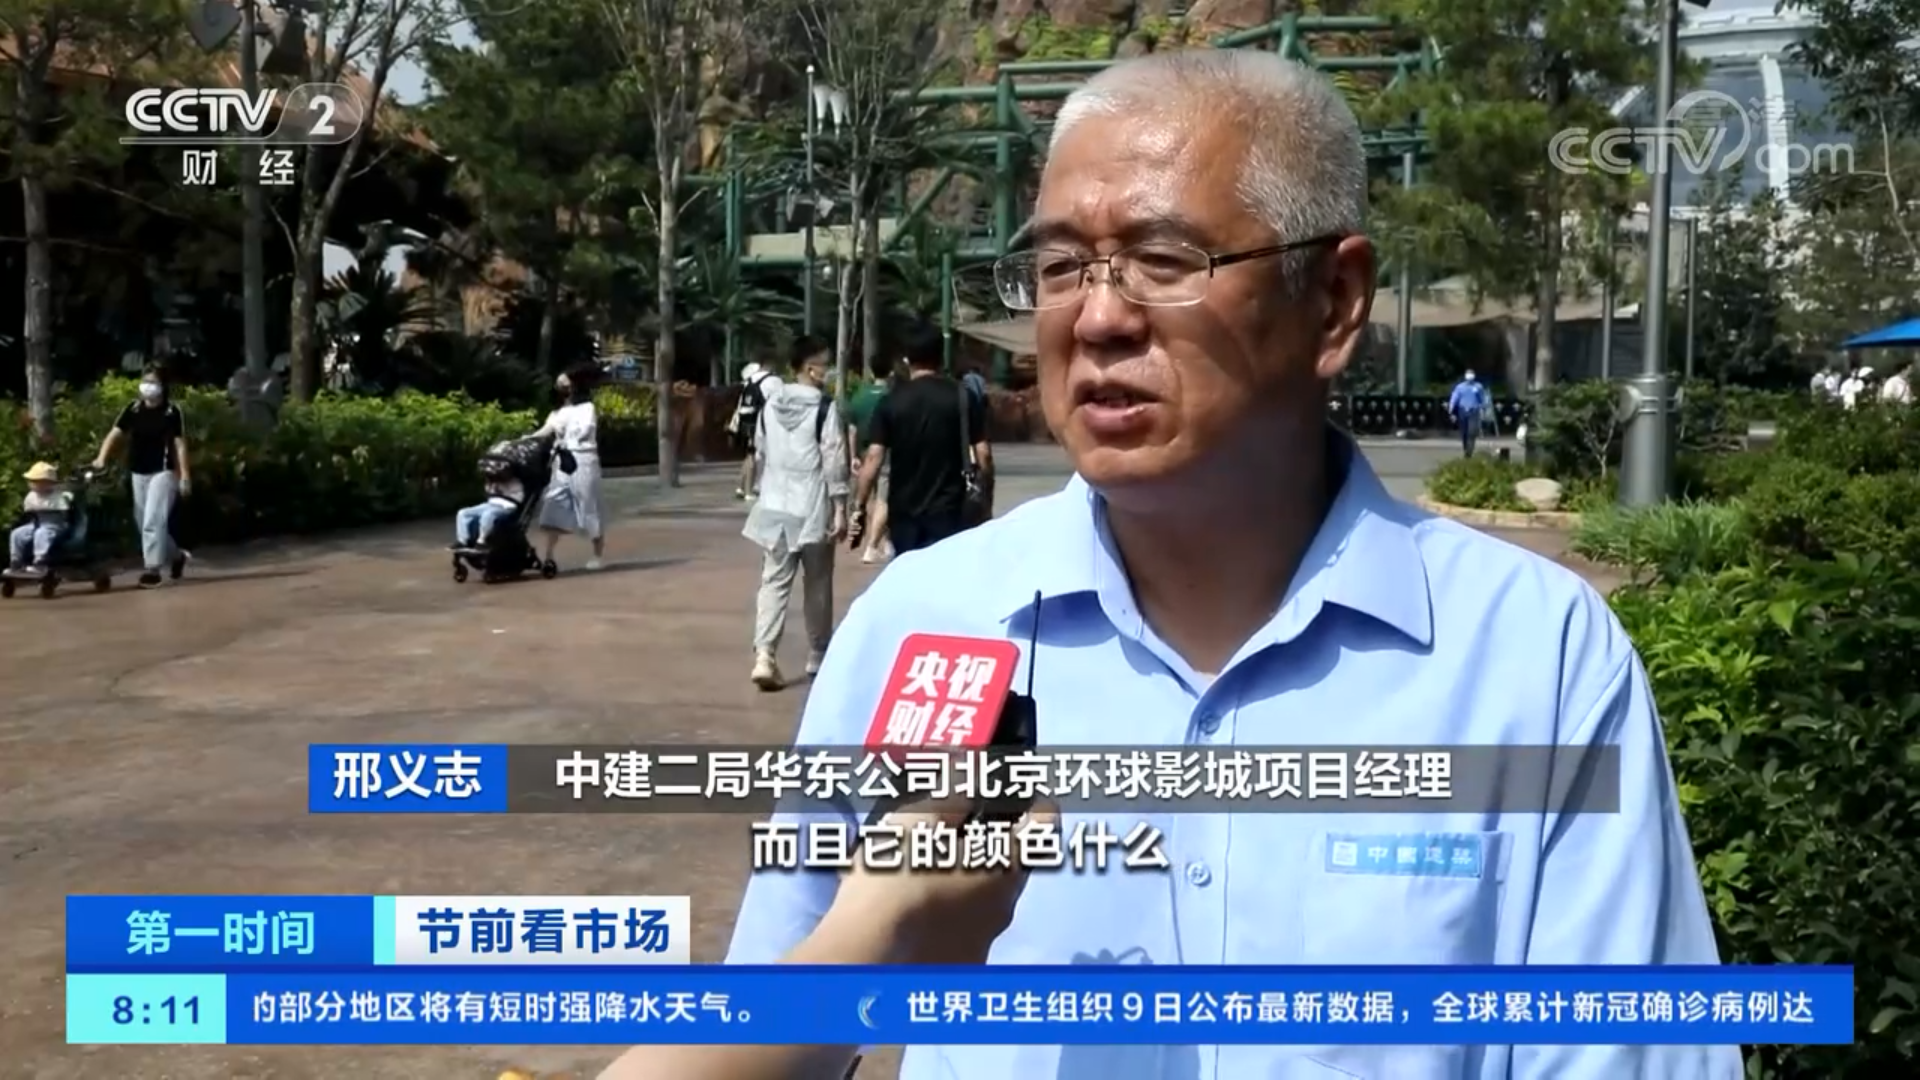 CCTV2：记者揭秘北京环球影城建设亮点，“基建狂魔”复刻电影经典场景